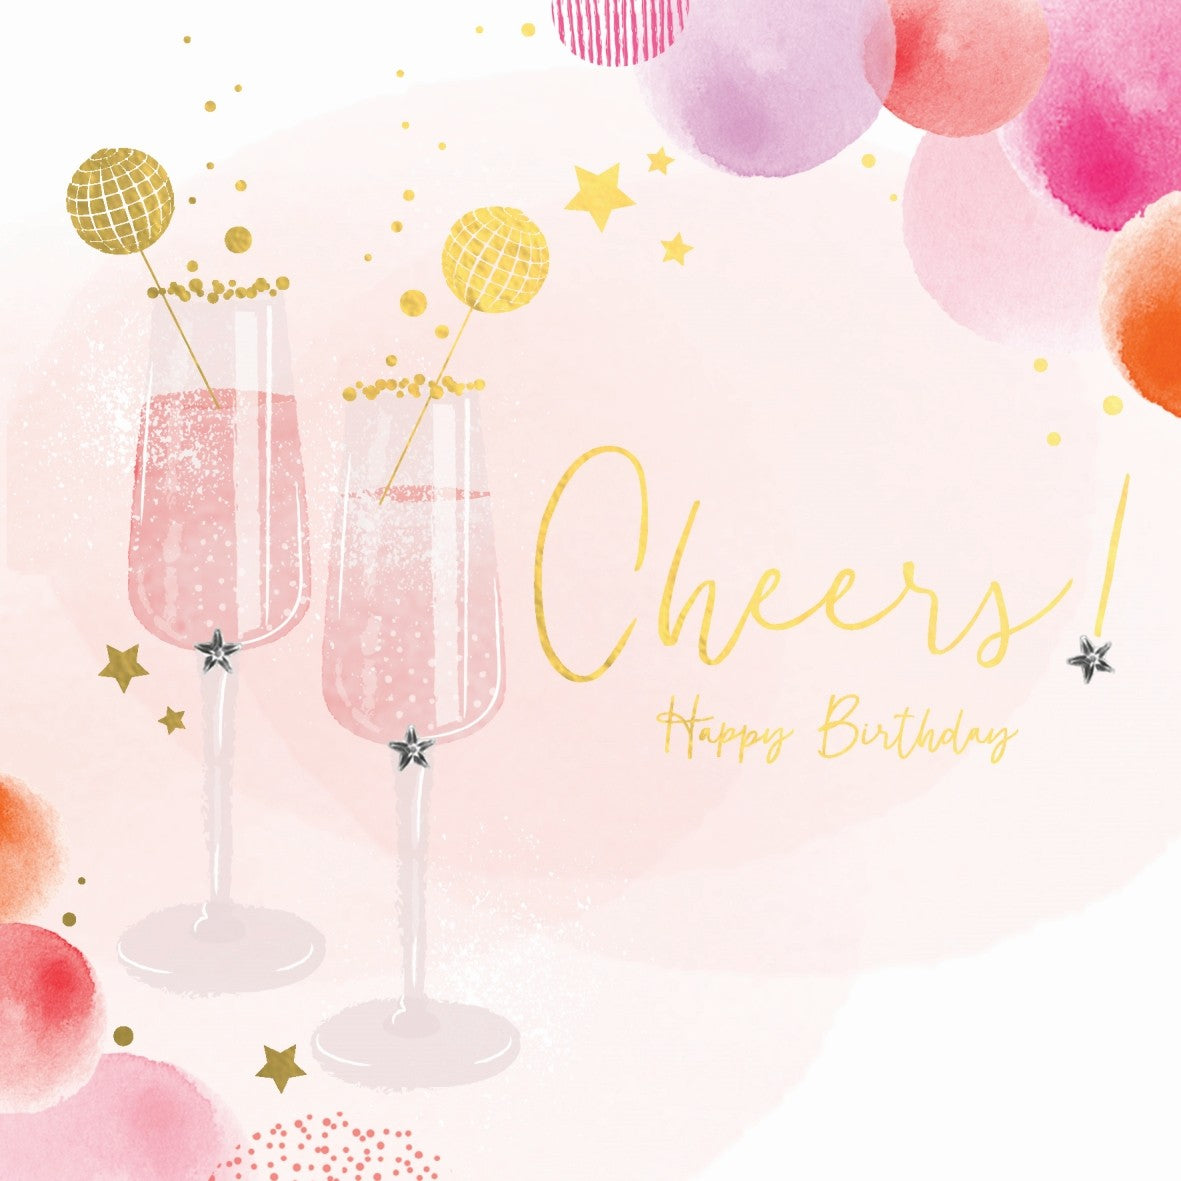 Candyfloss Cheers Happy Birthday Card